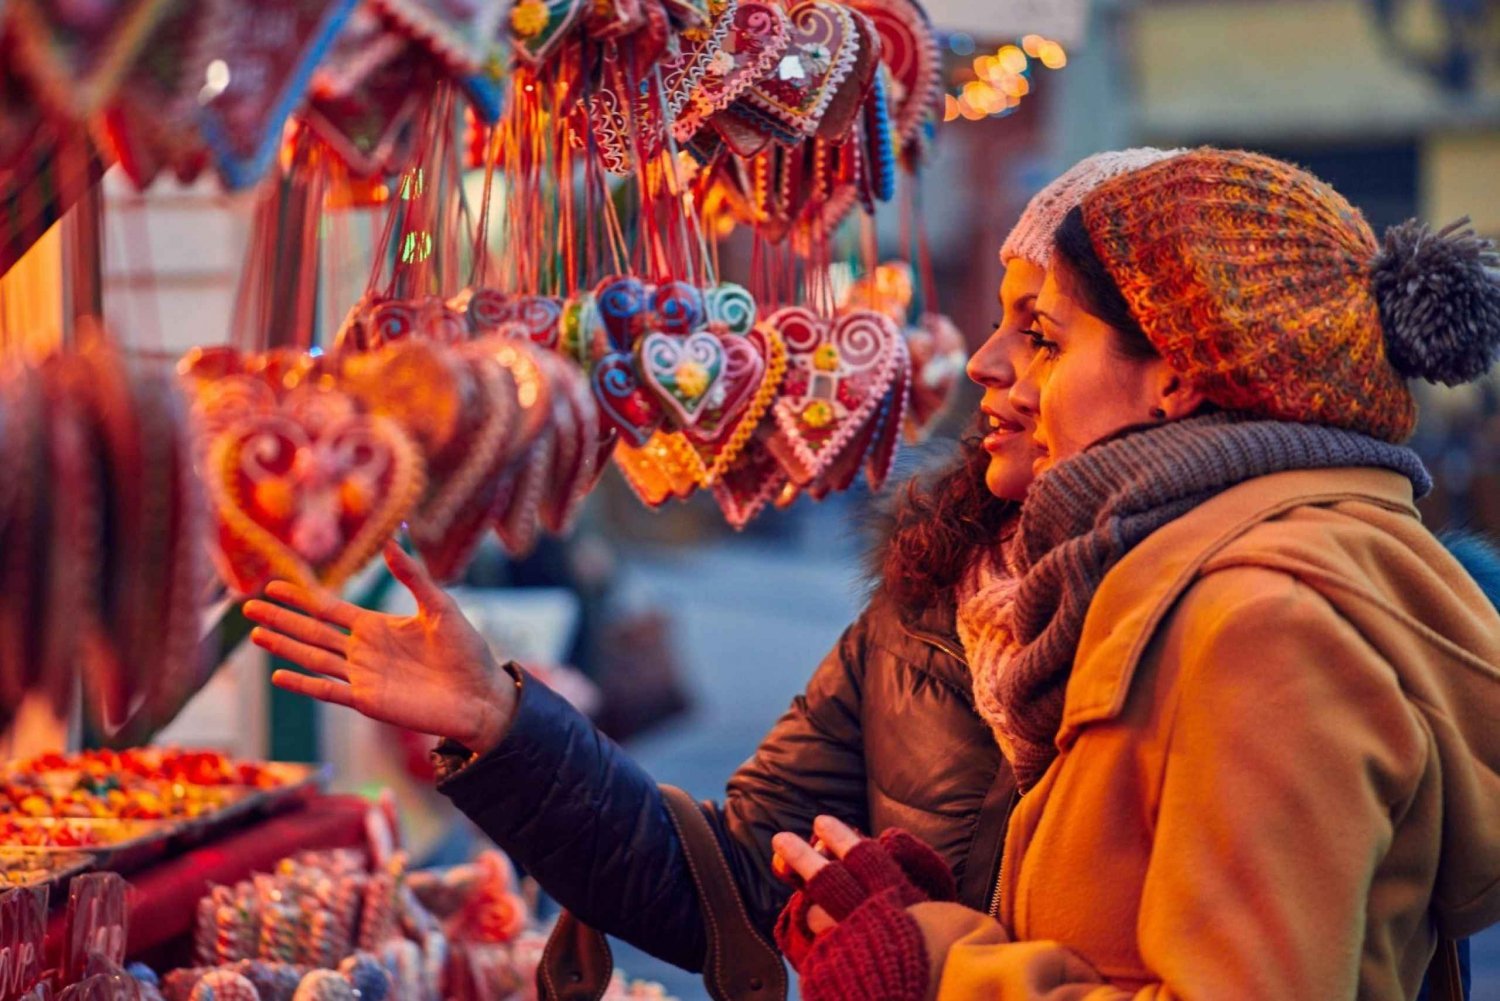 Krakova : Christmas Markets Festive Digital Game